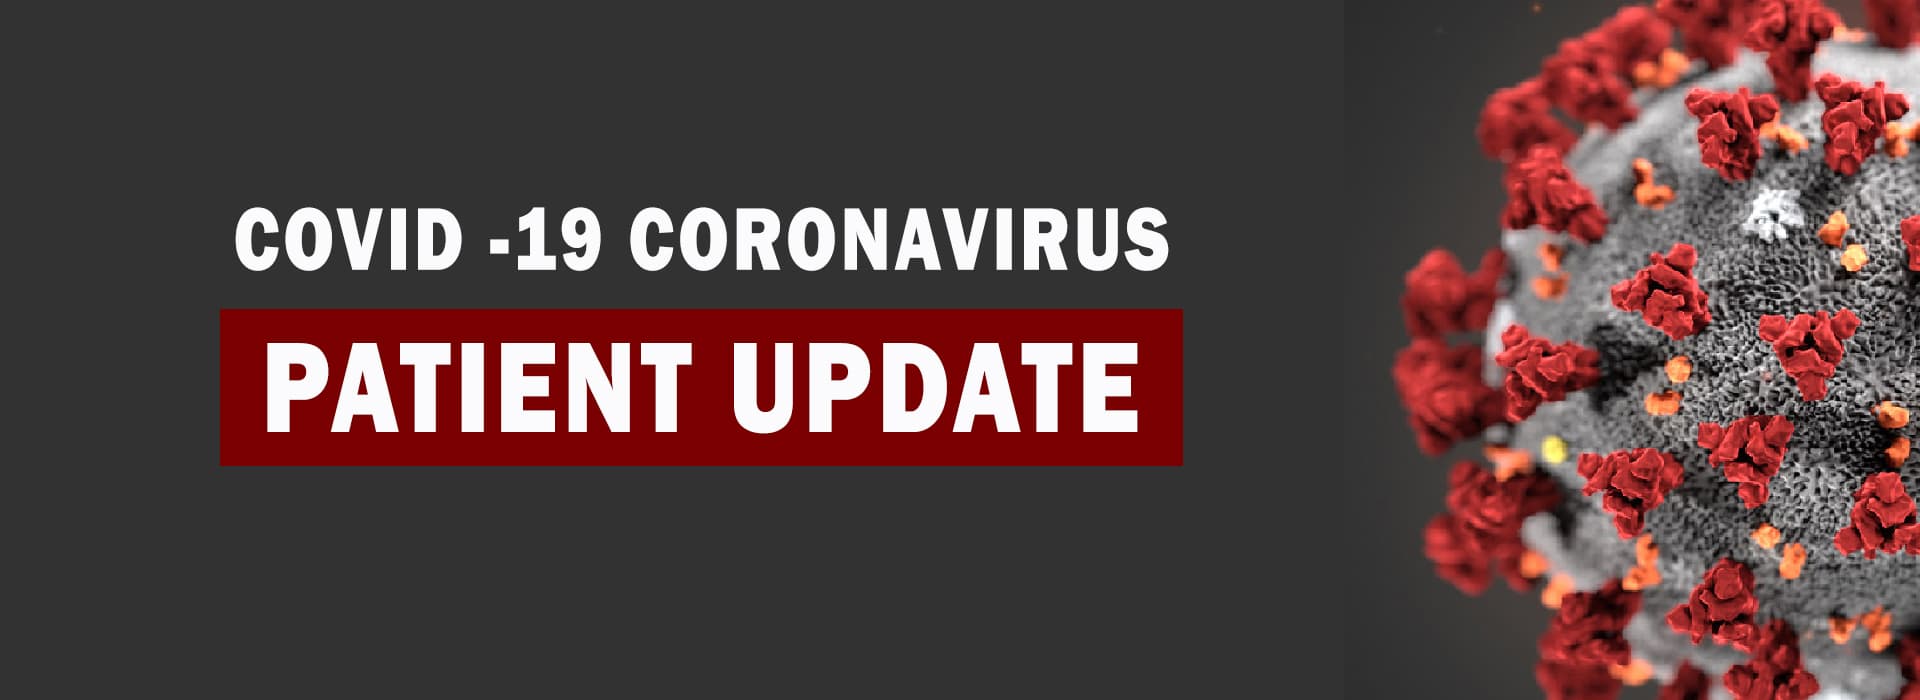 The poster for Corona virus update